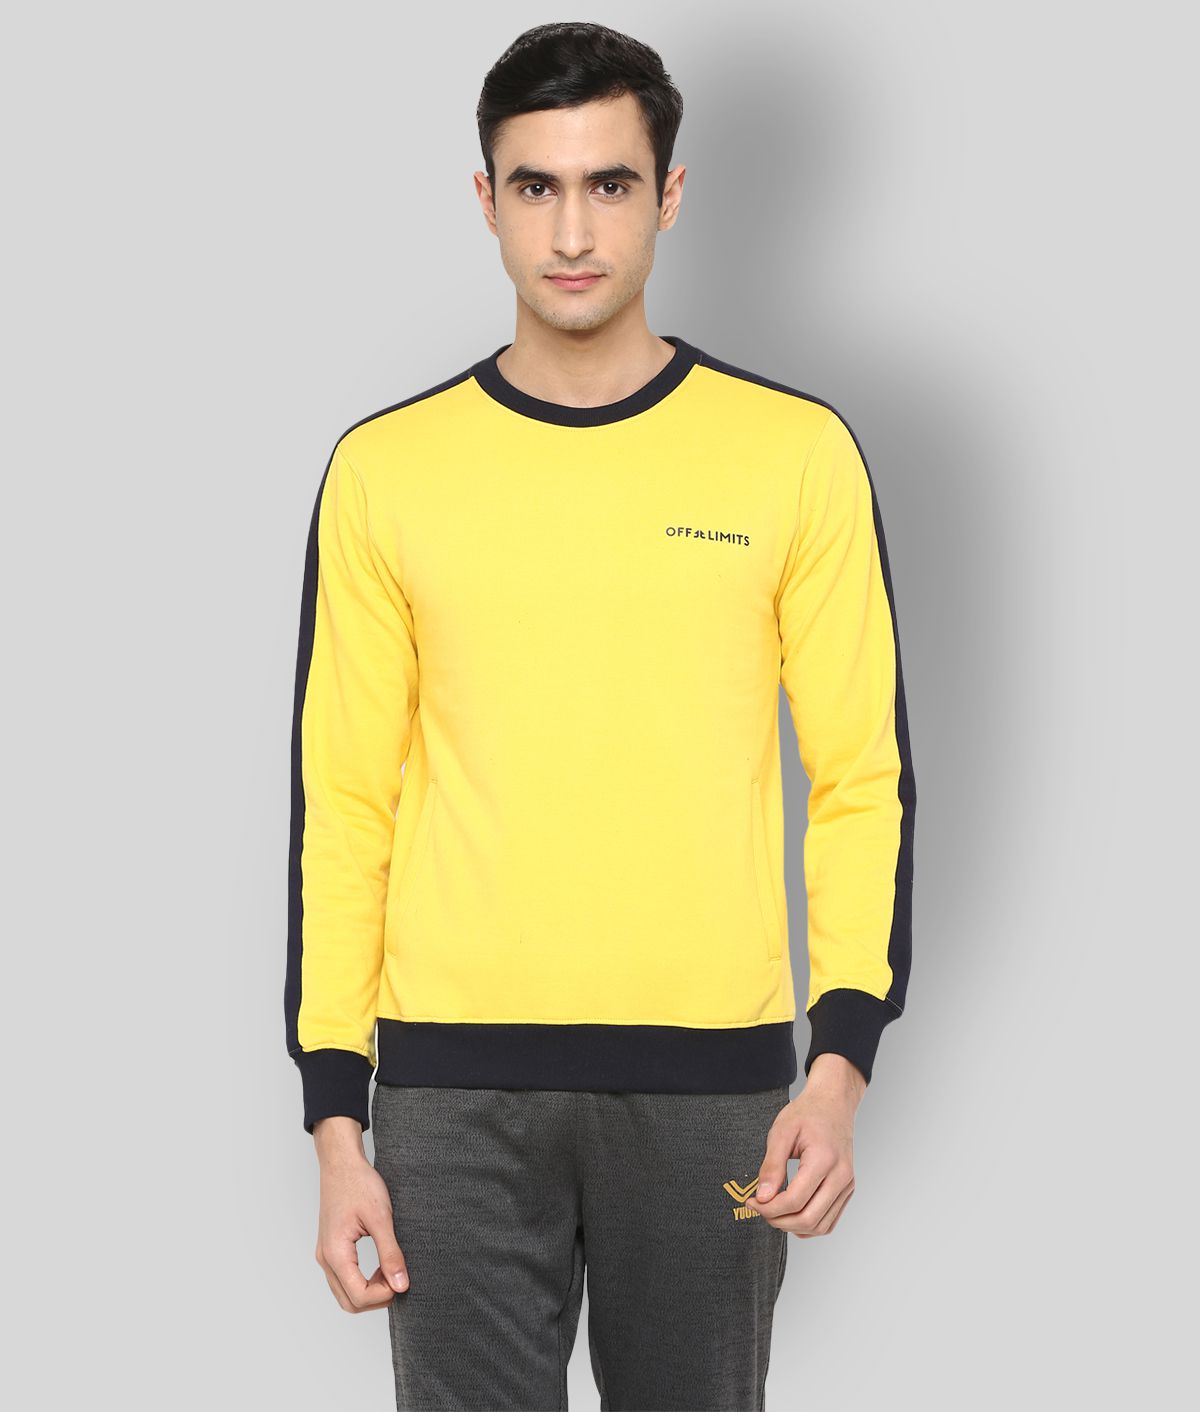     			OFF LIMITS Yellow Polyester Sweatshirt